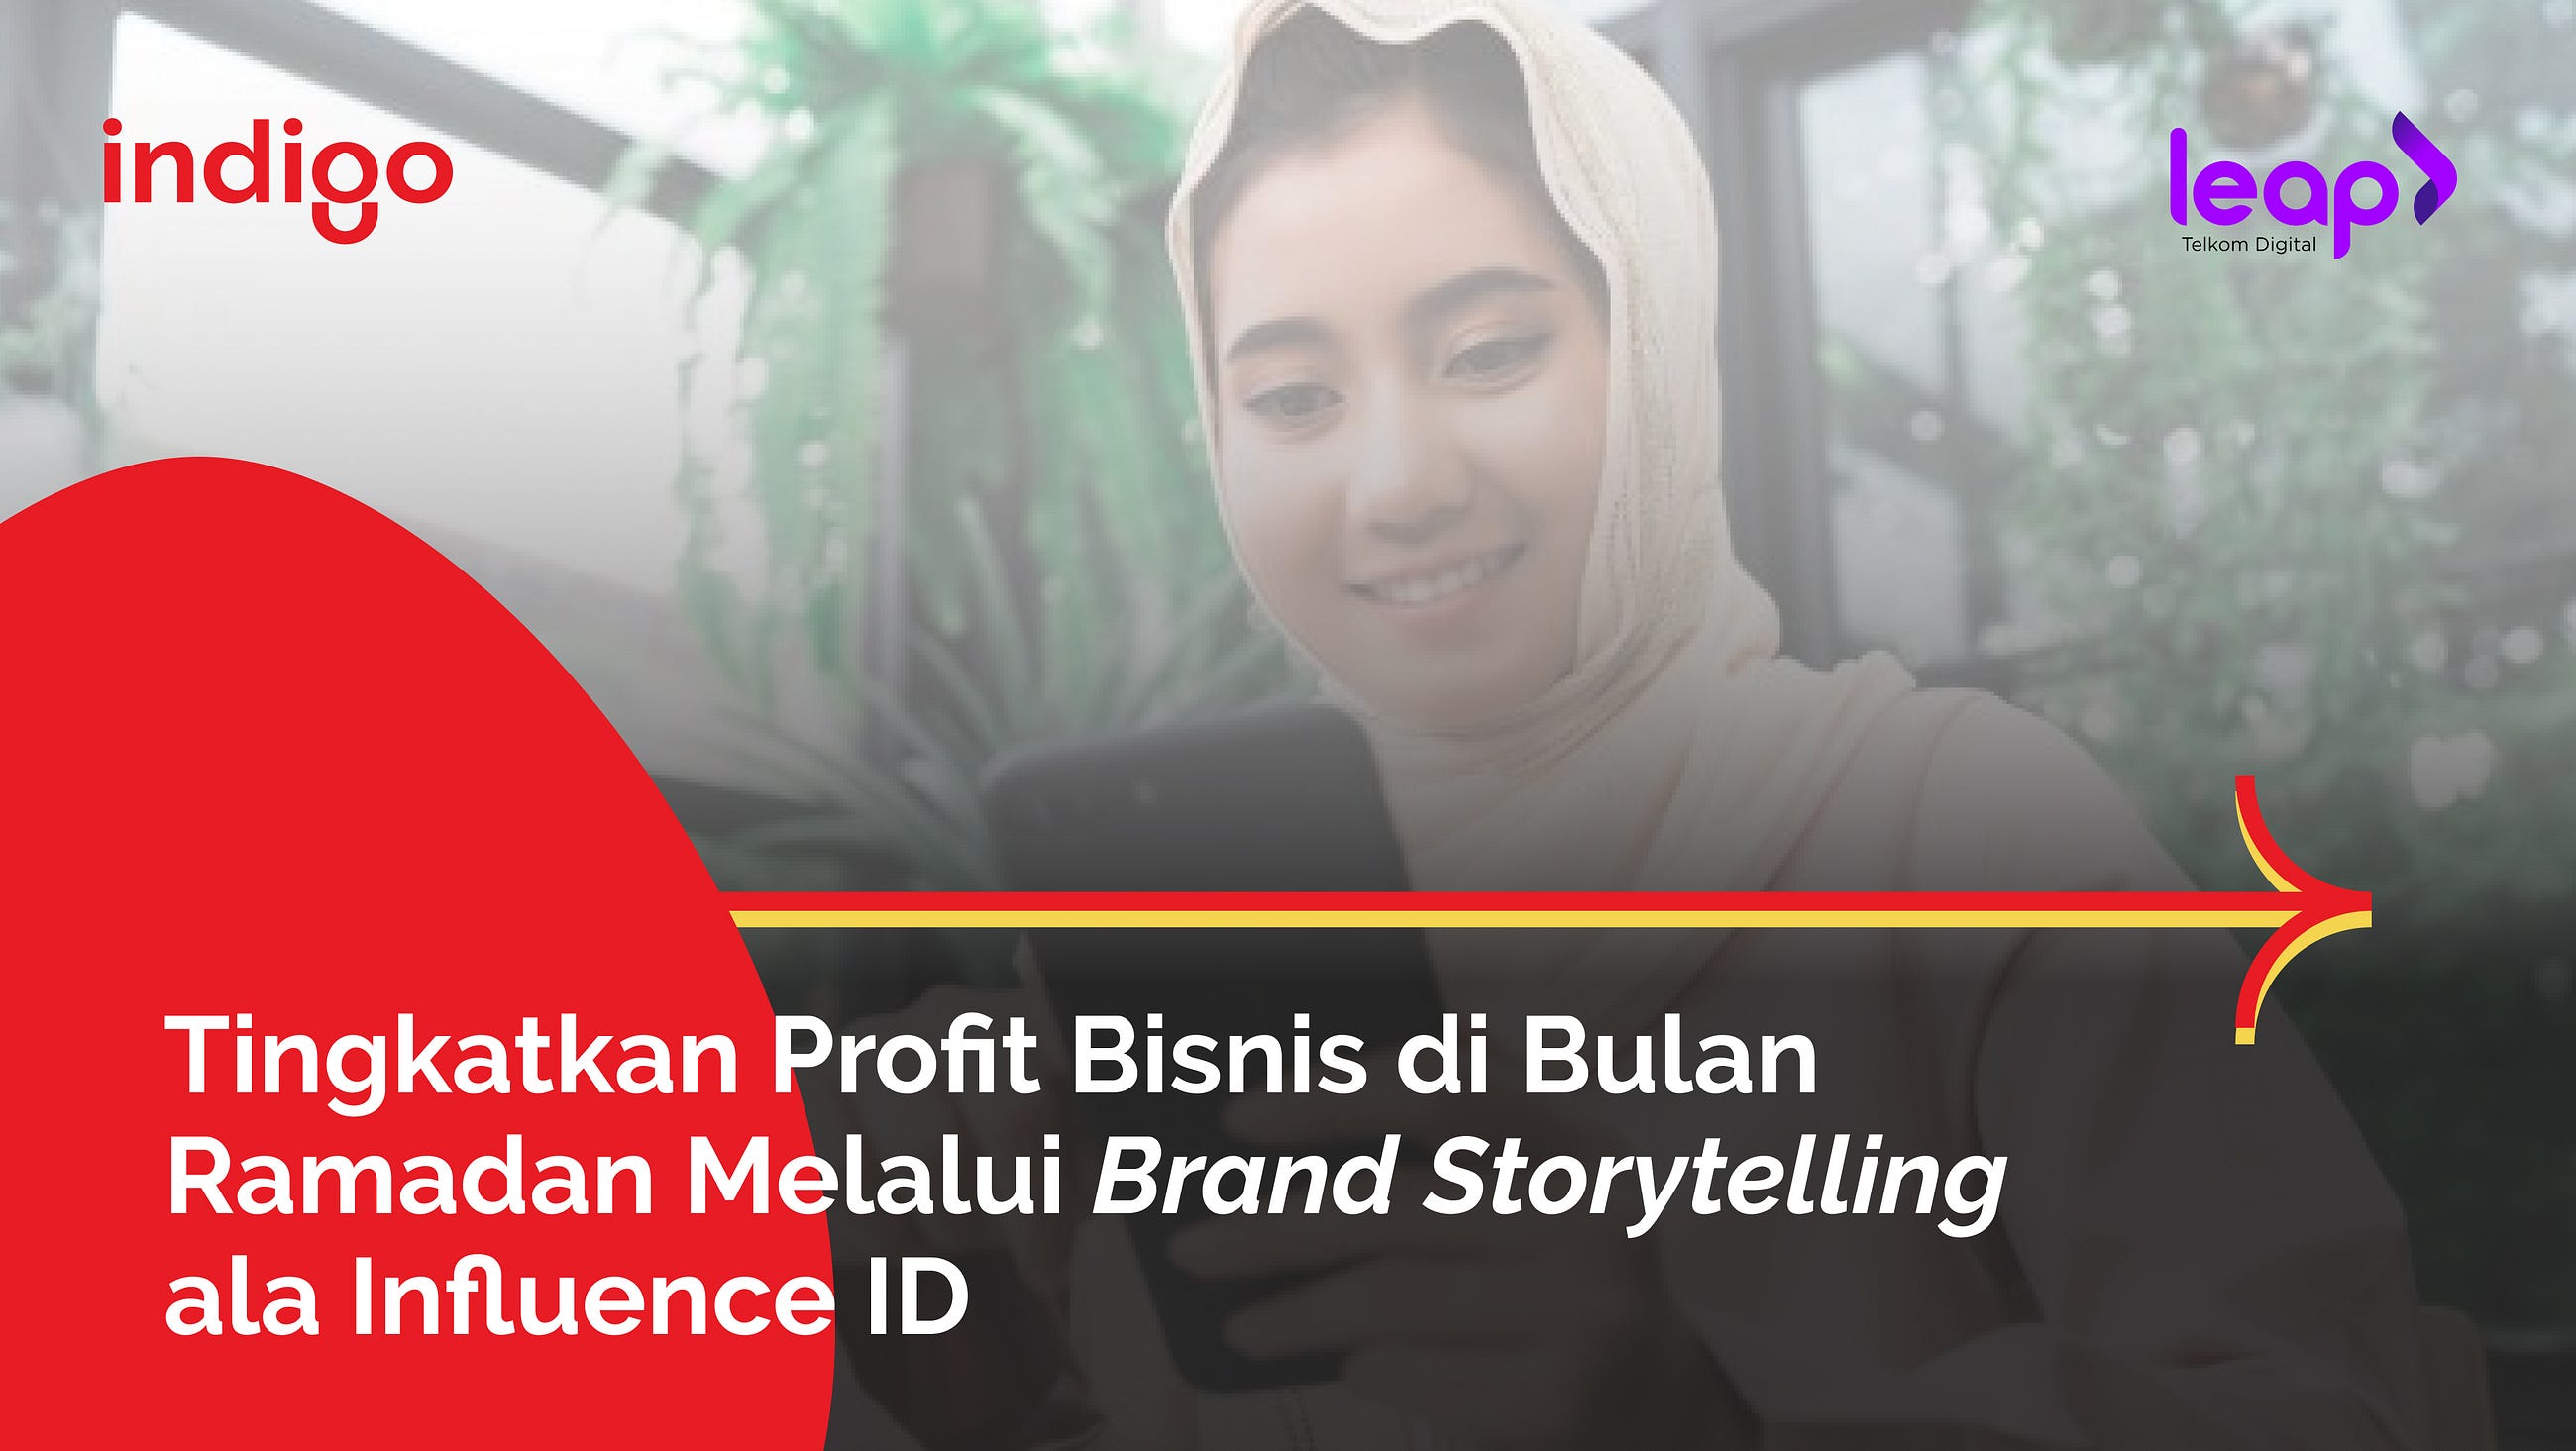 Tingkatkan Profit Bisnis di Bulan Ramadan Melalui Brand Storytelling ala Influence ID